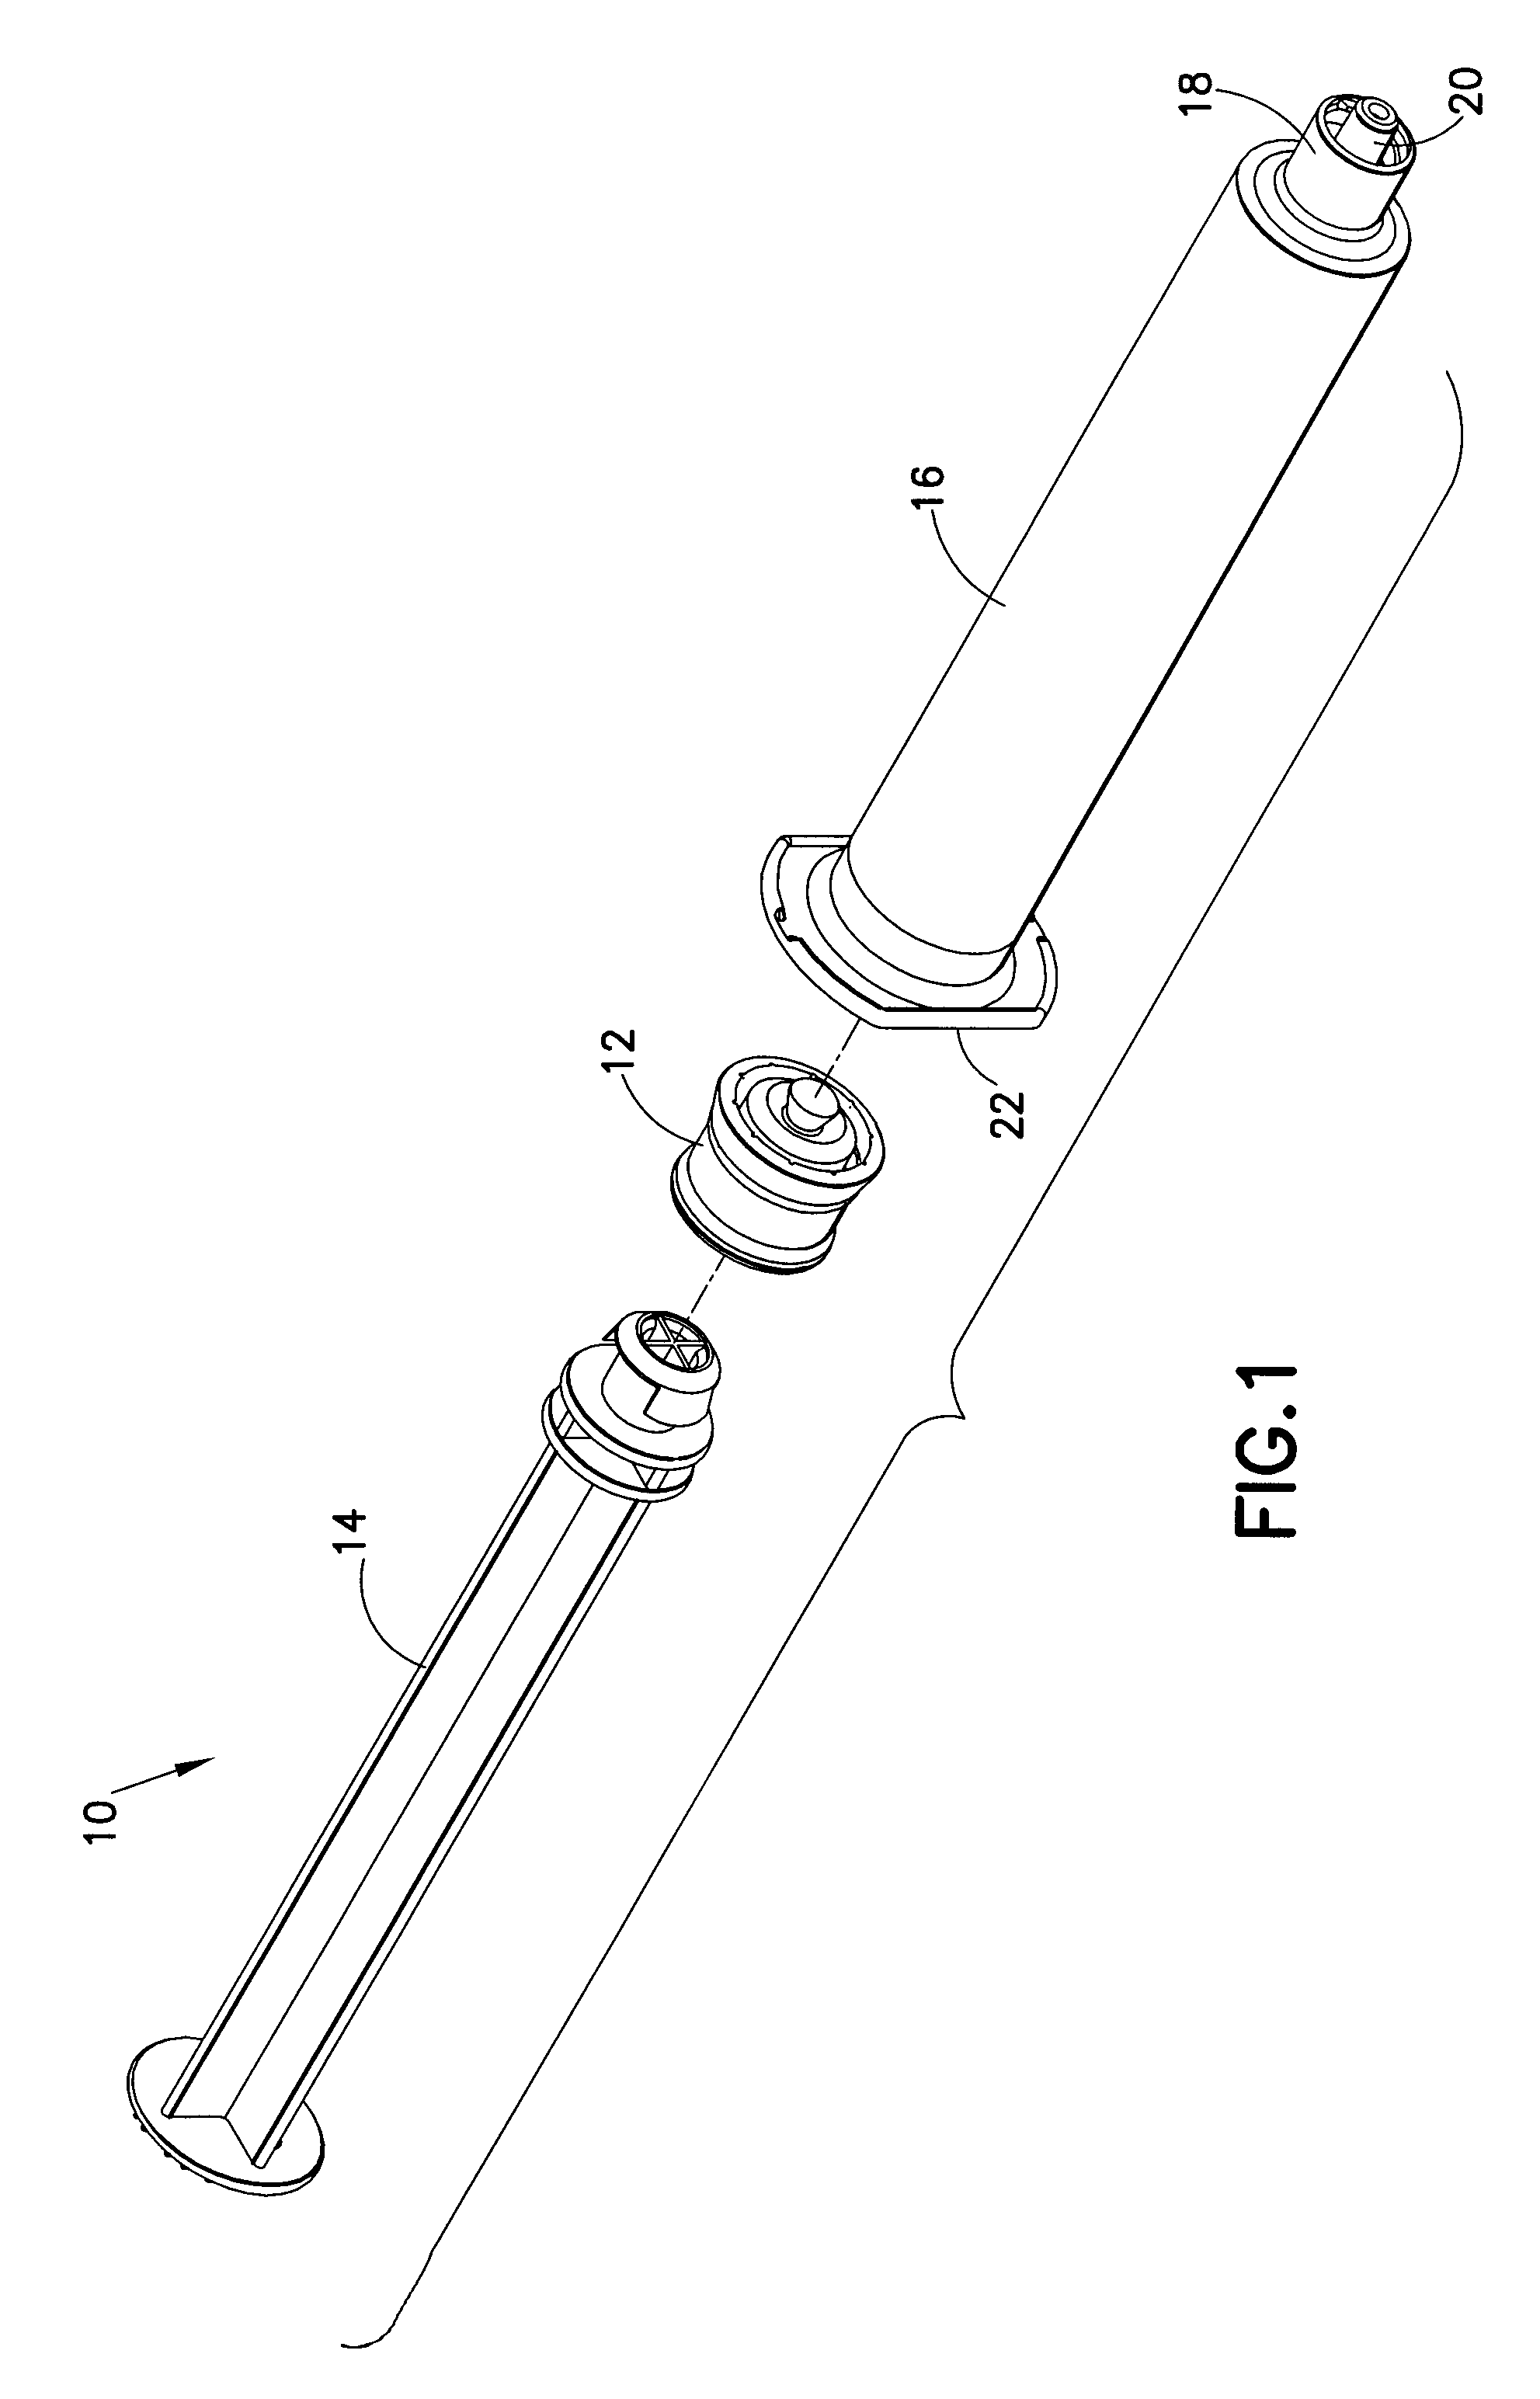 Stopper and plunger rod for a pre-filled syringe